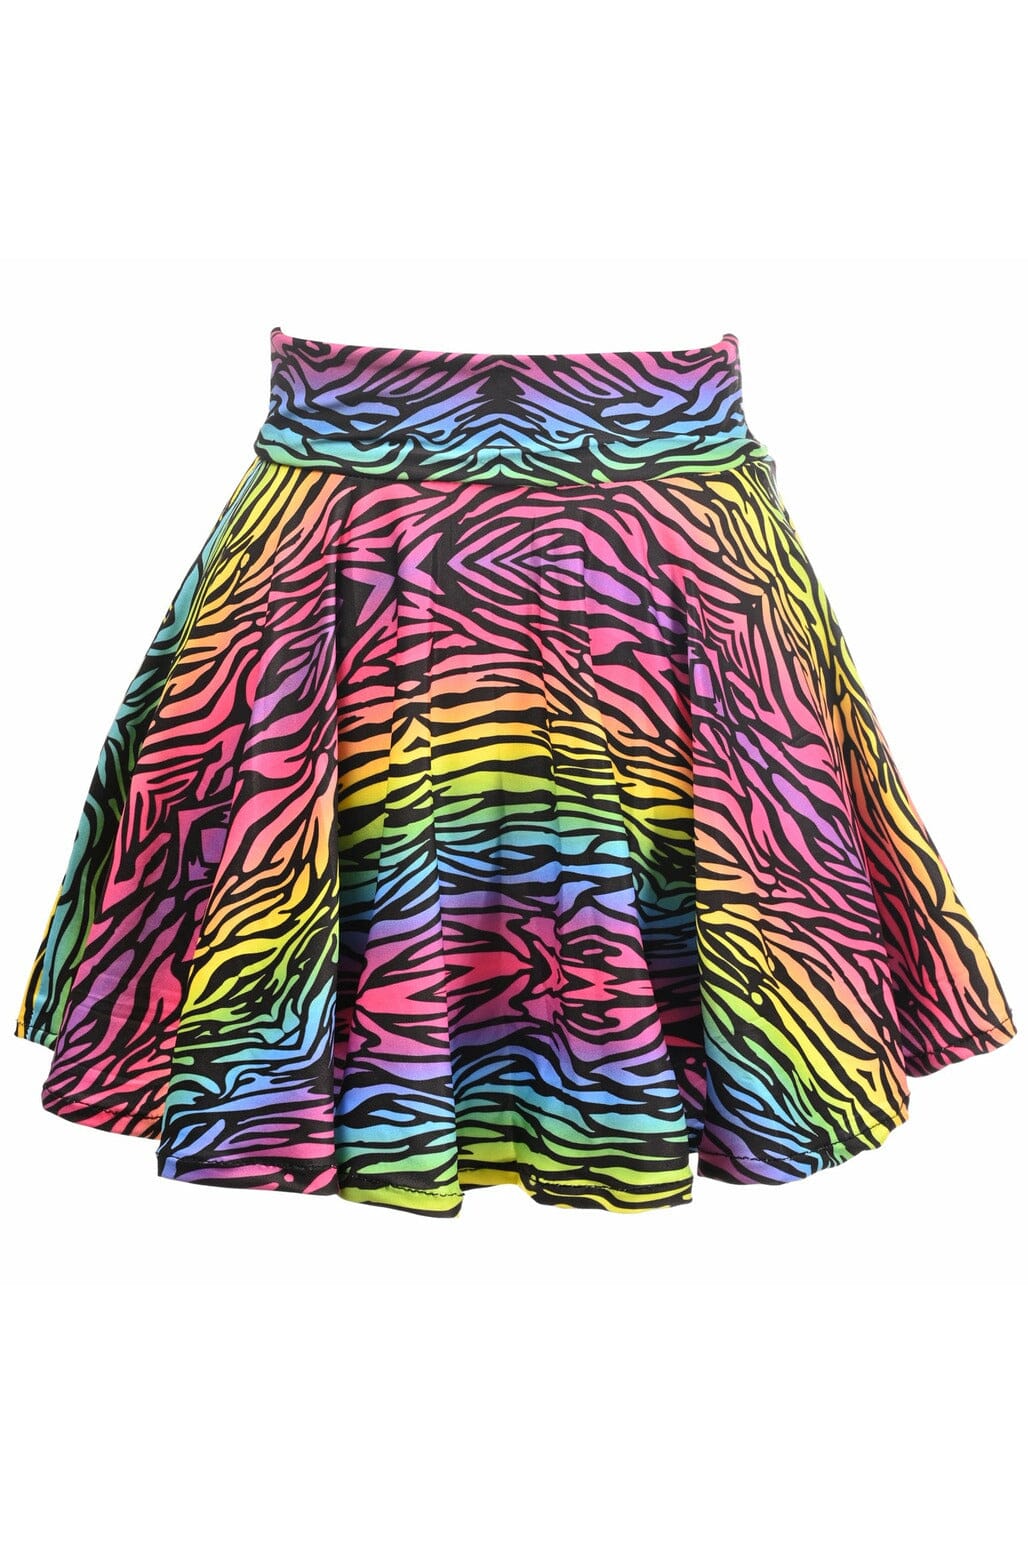 Rainbow Animal Print Stretch Lycra Skirt-Costume Skirts-Daisy Corsets-Rainbow-XS-SEXYSHOES.COM